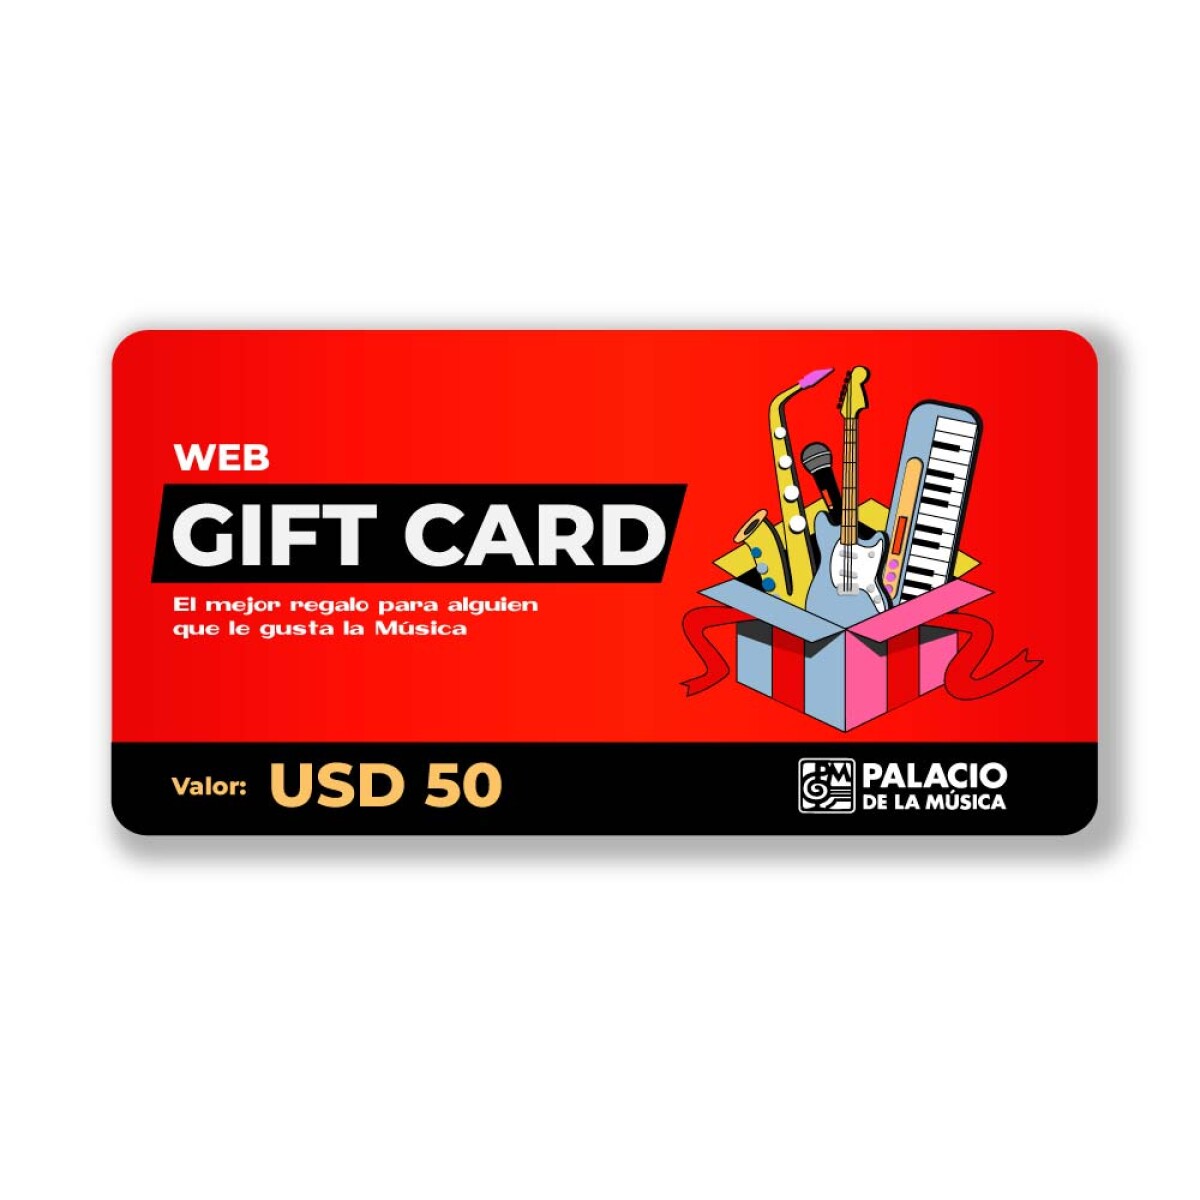 Web Gift Card | Valor Usd 50 